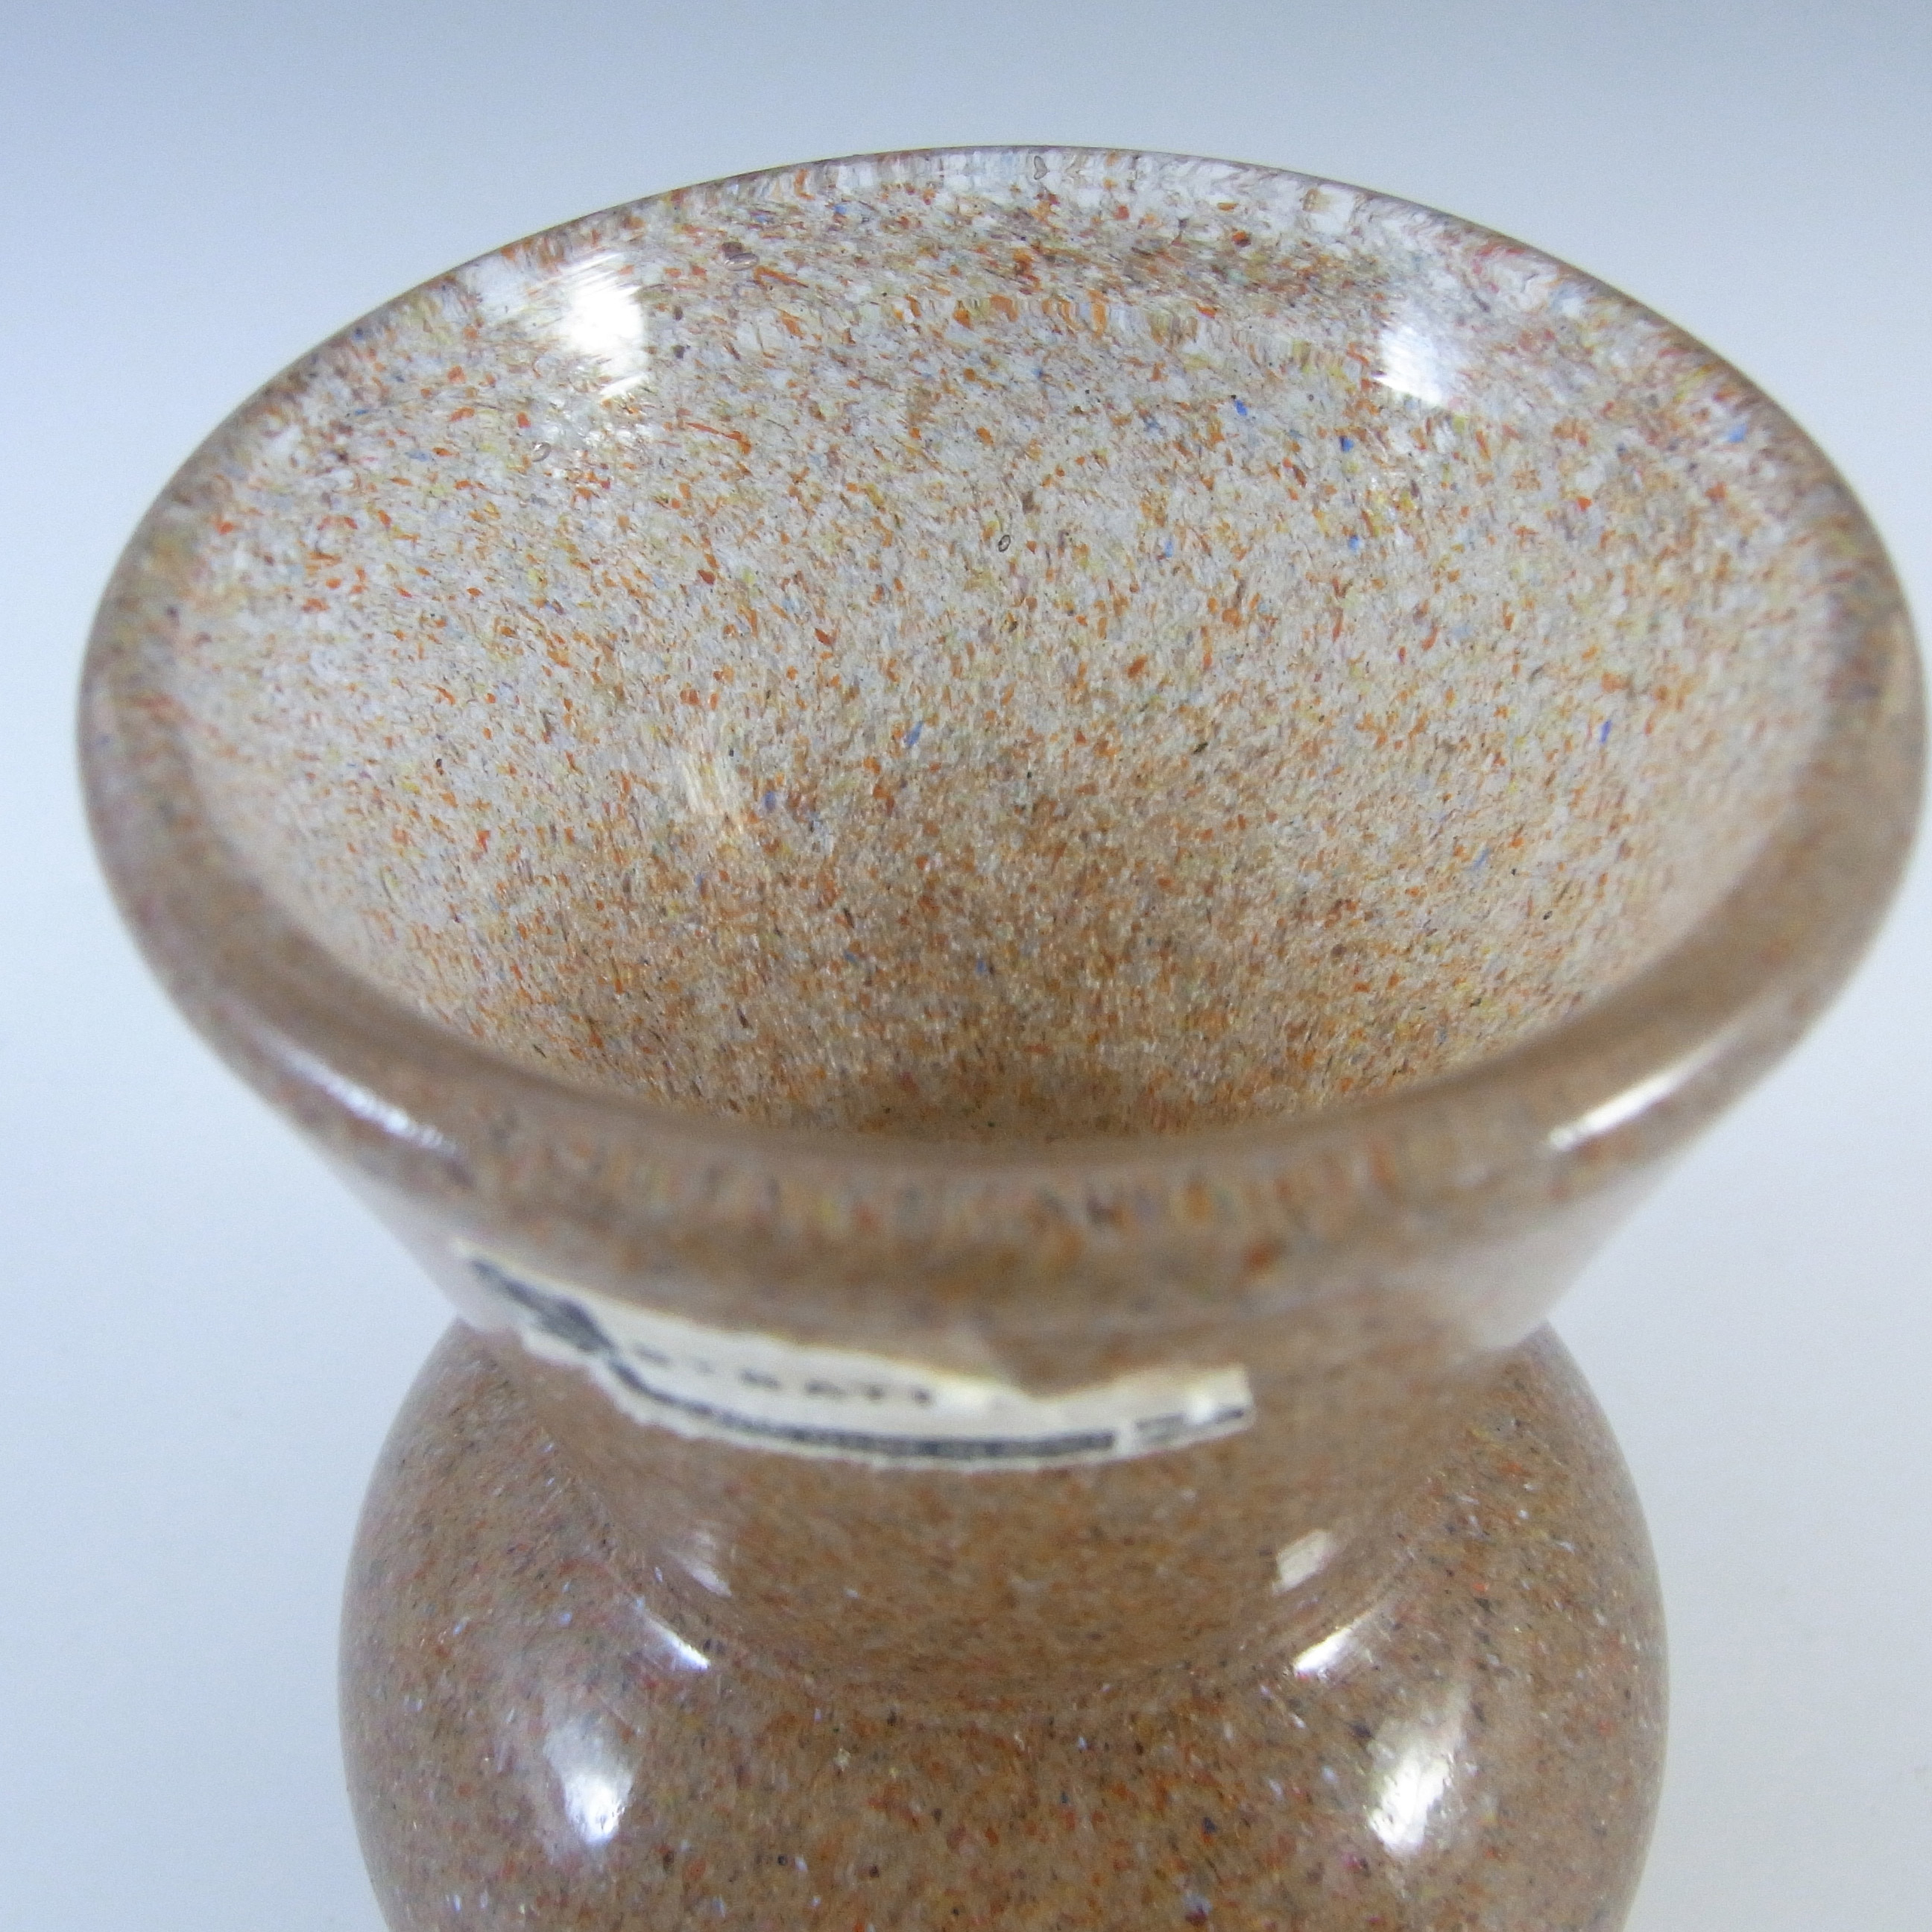 Strathearn Speckled Brown Glass Vase V029 - Labelled - Click Image to Close